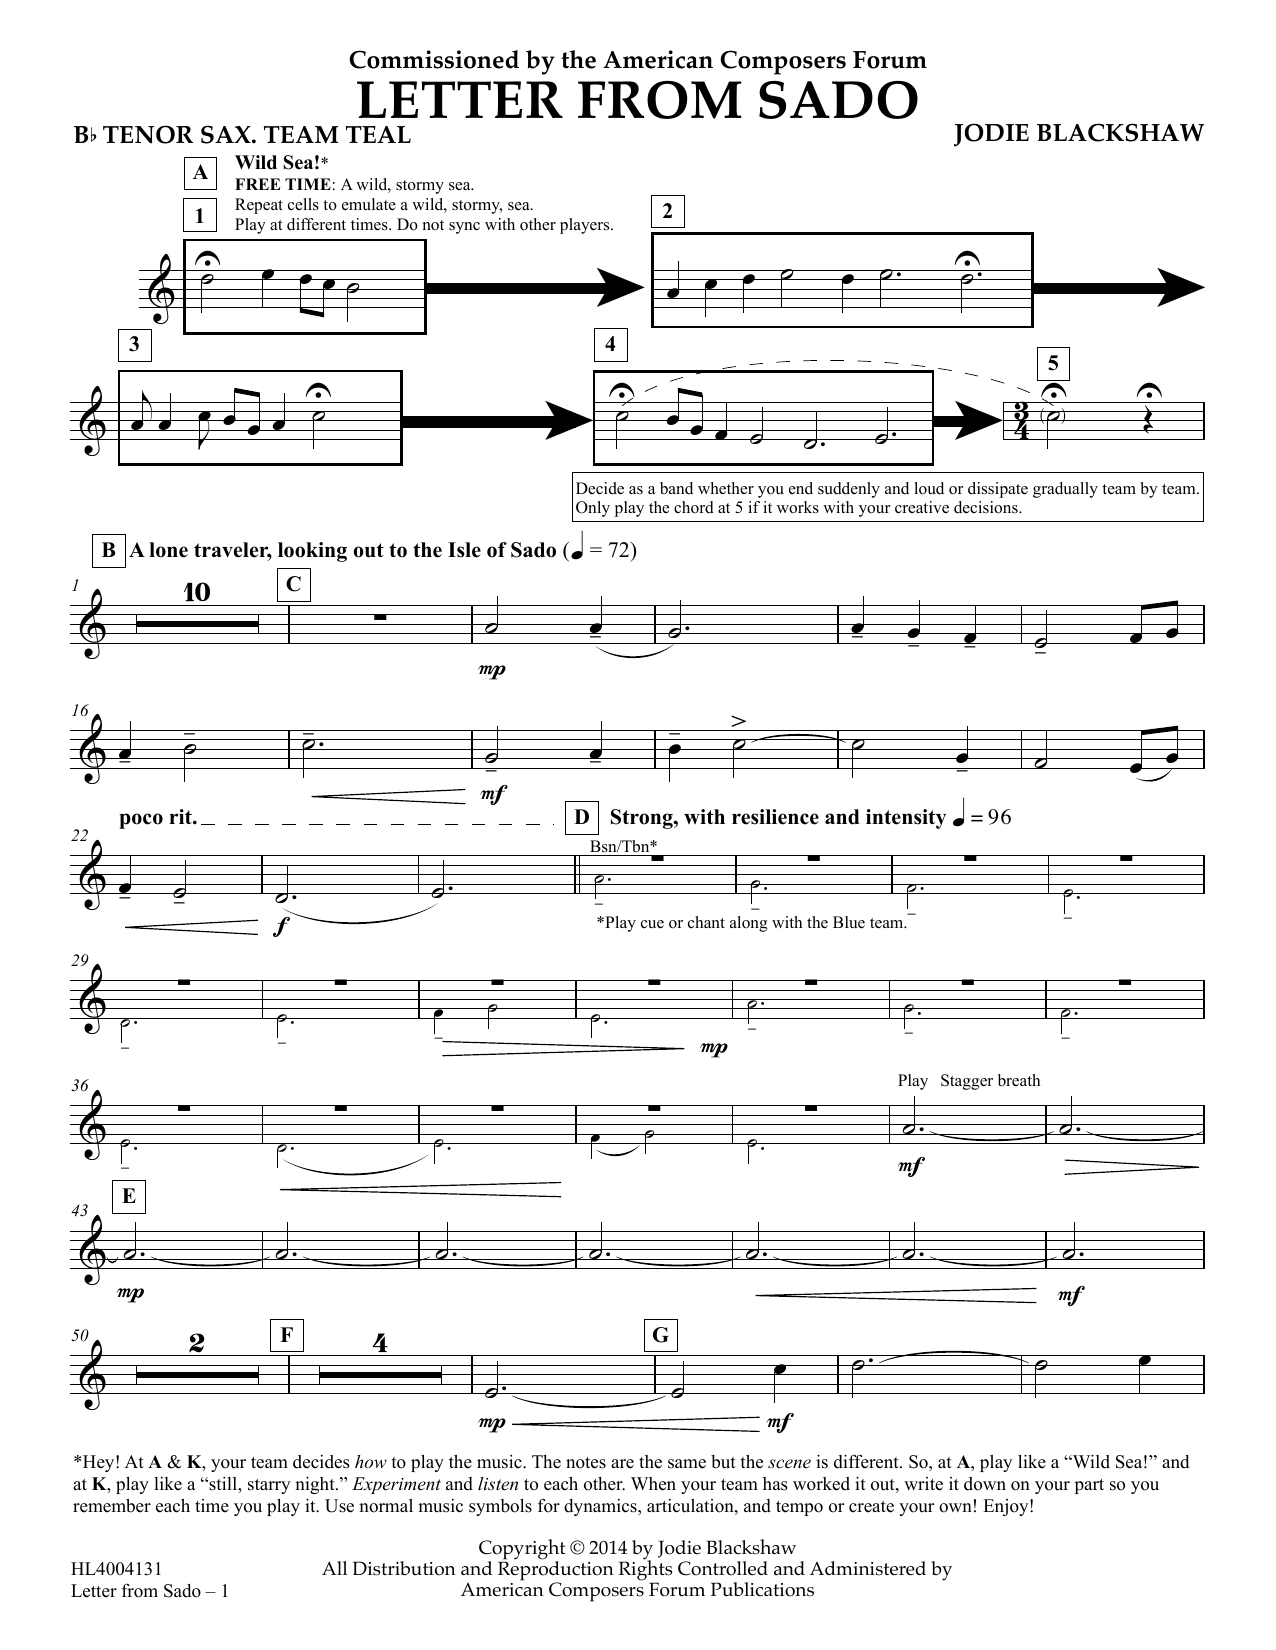 Jodie Blackshaw Letter from Sado - Bb Tenor Saxophone Team Teal Sheet Music Notes & Chords for Concert Band - Download or Print PDF